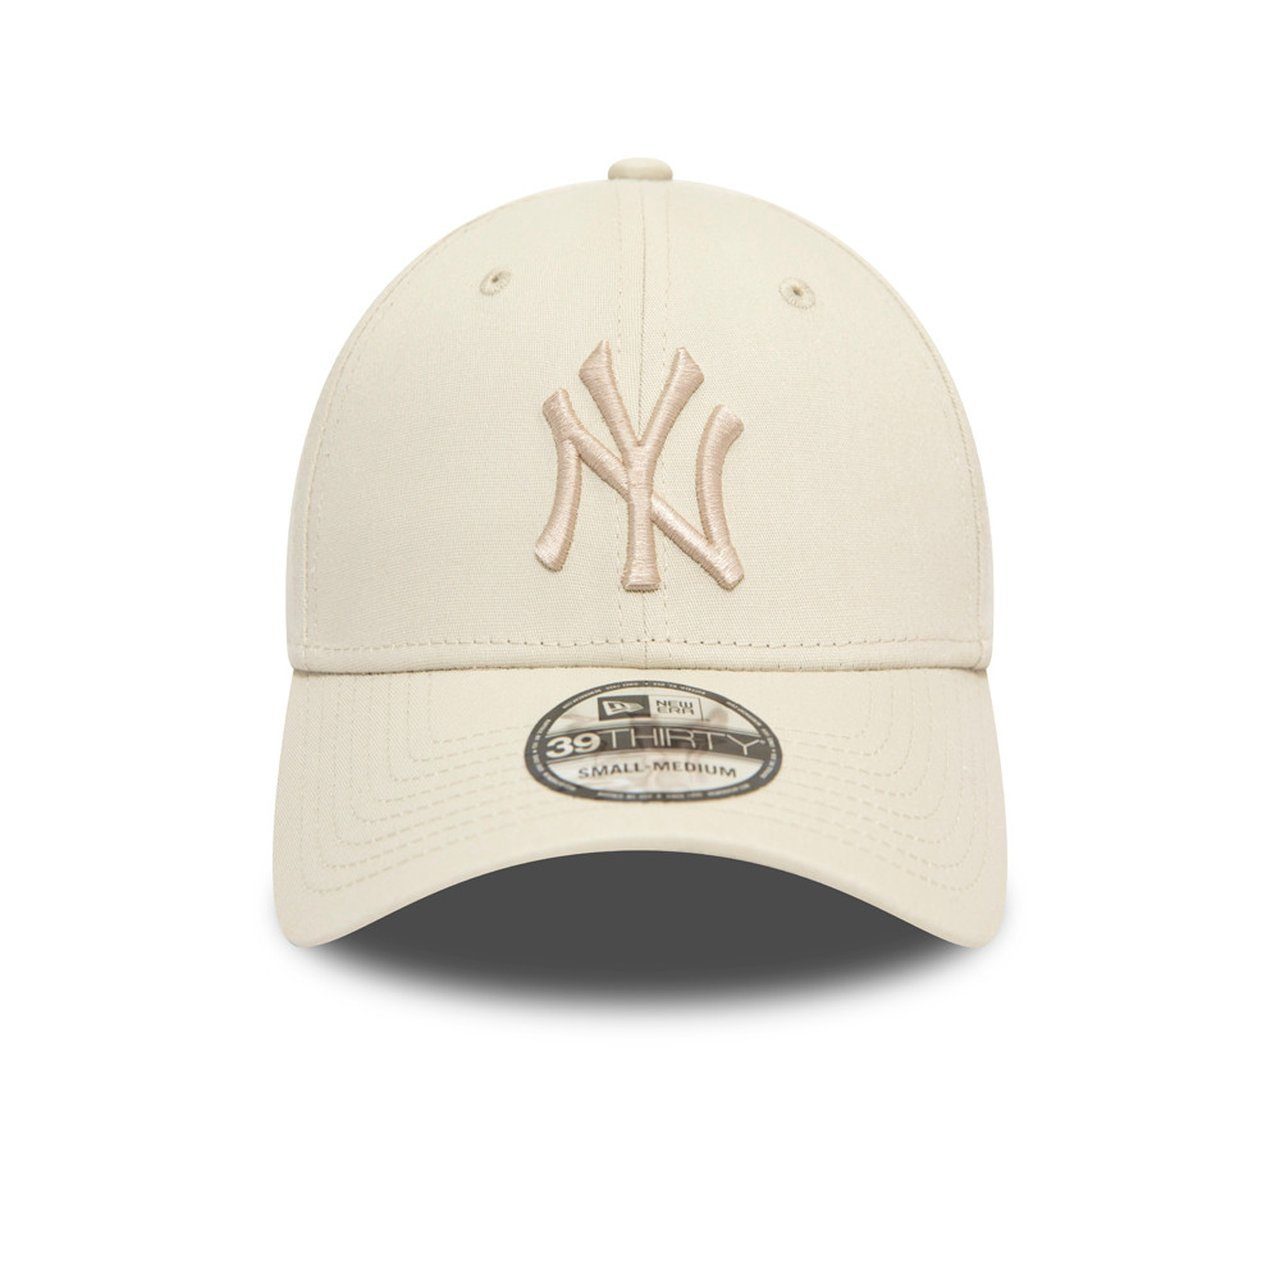 Flex New Cap Era New Yankees York 39Thirty